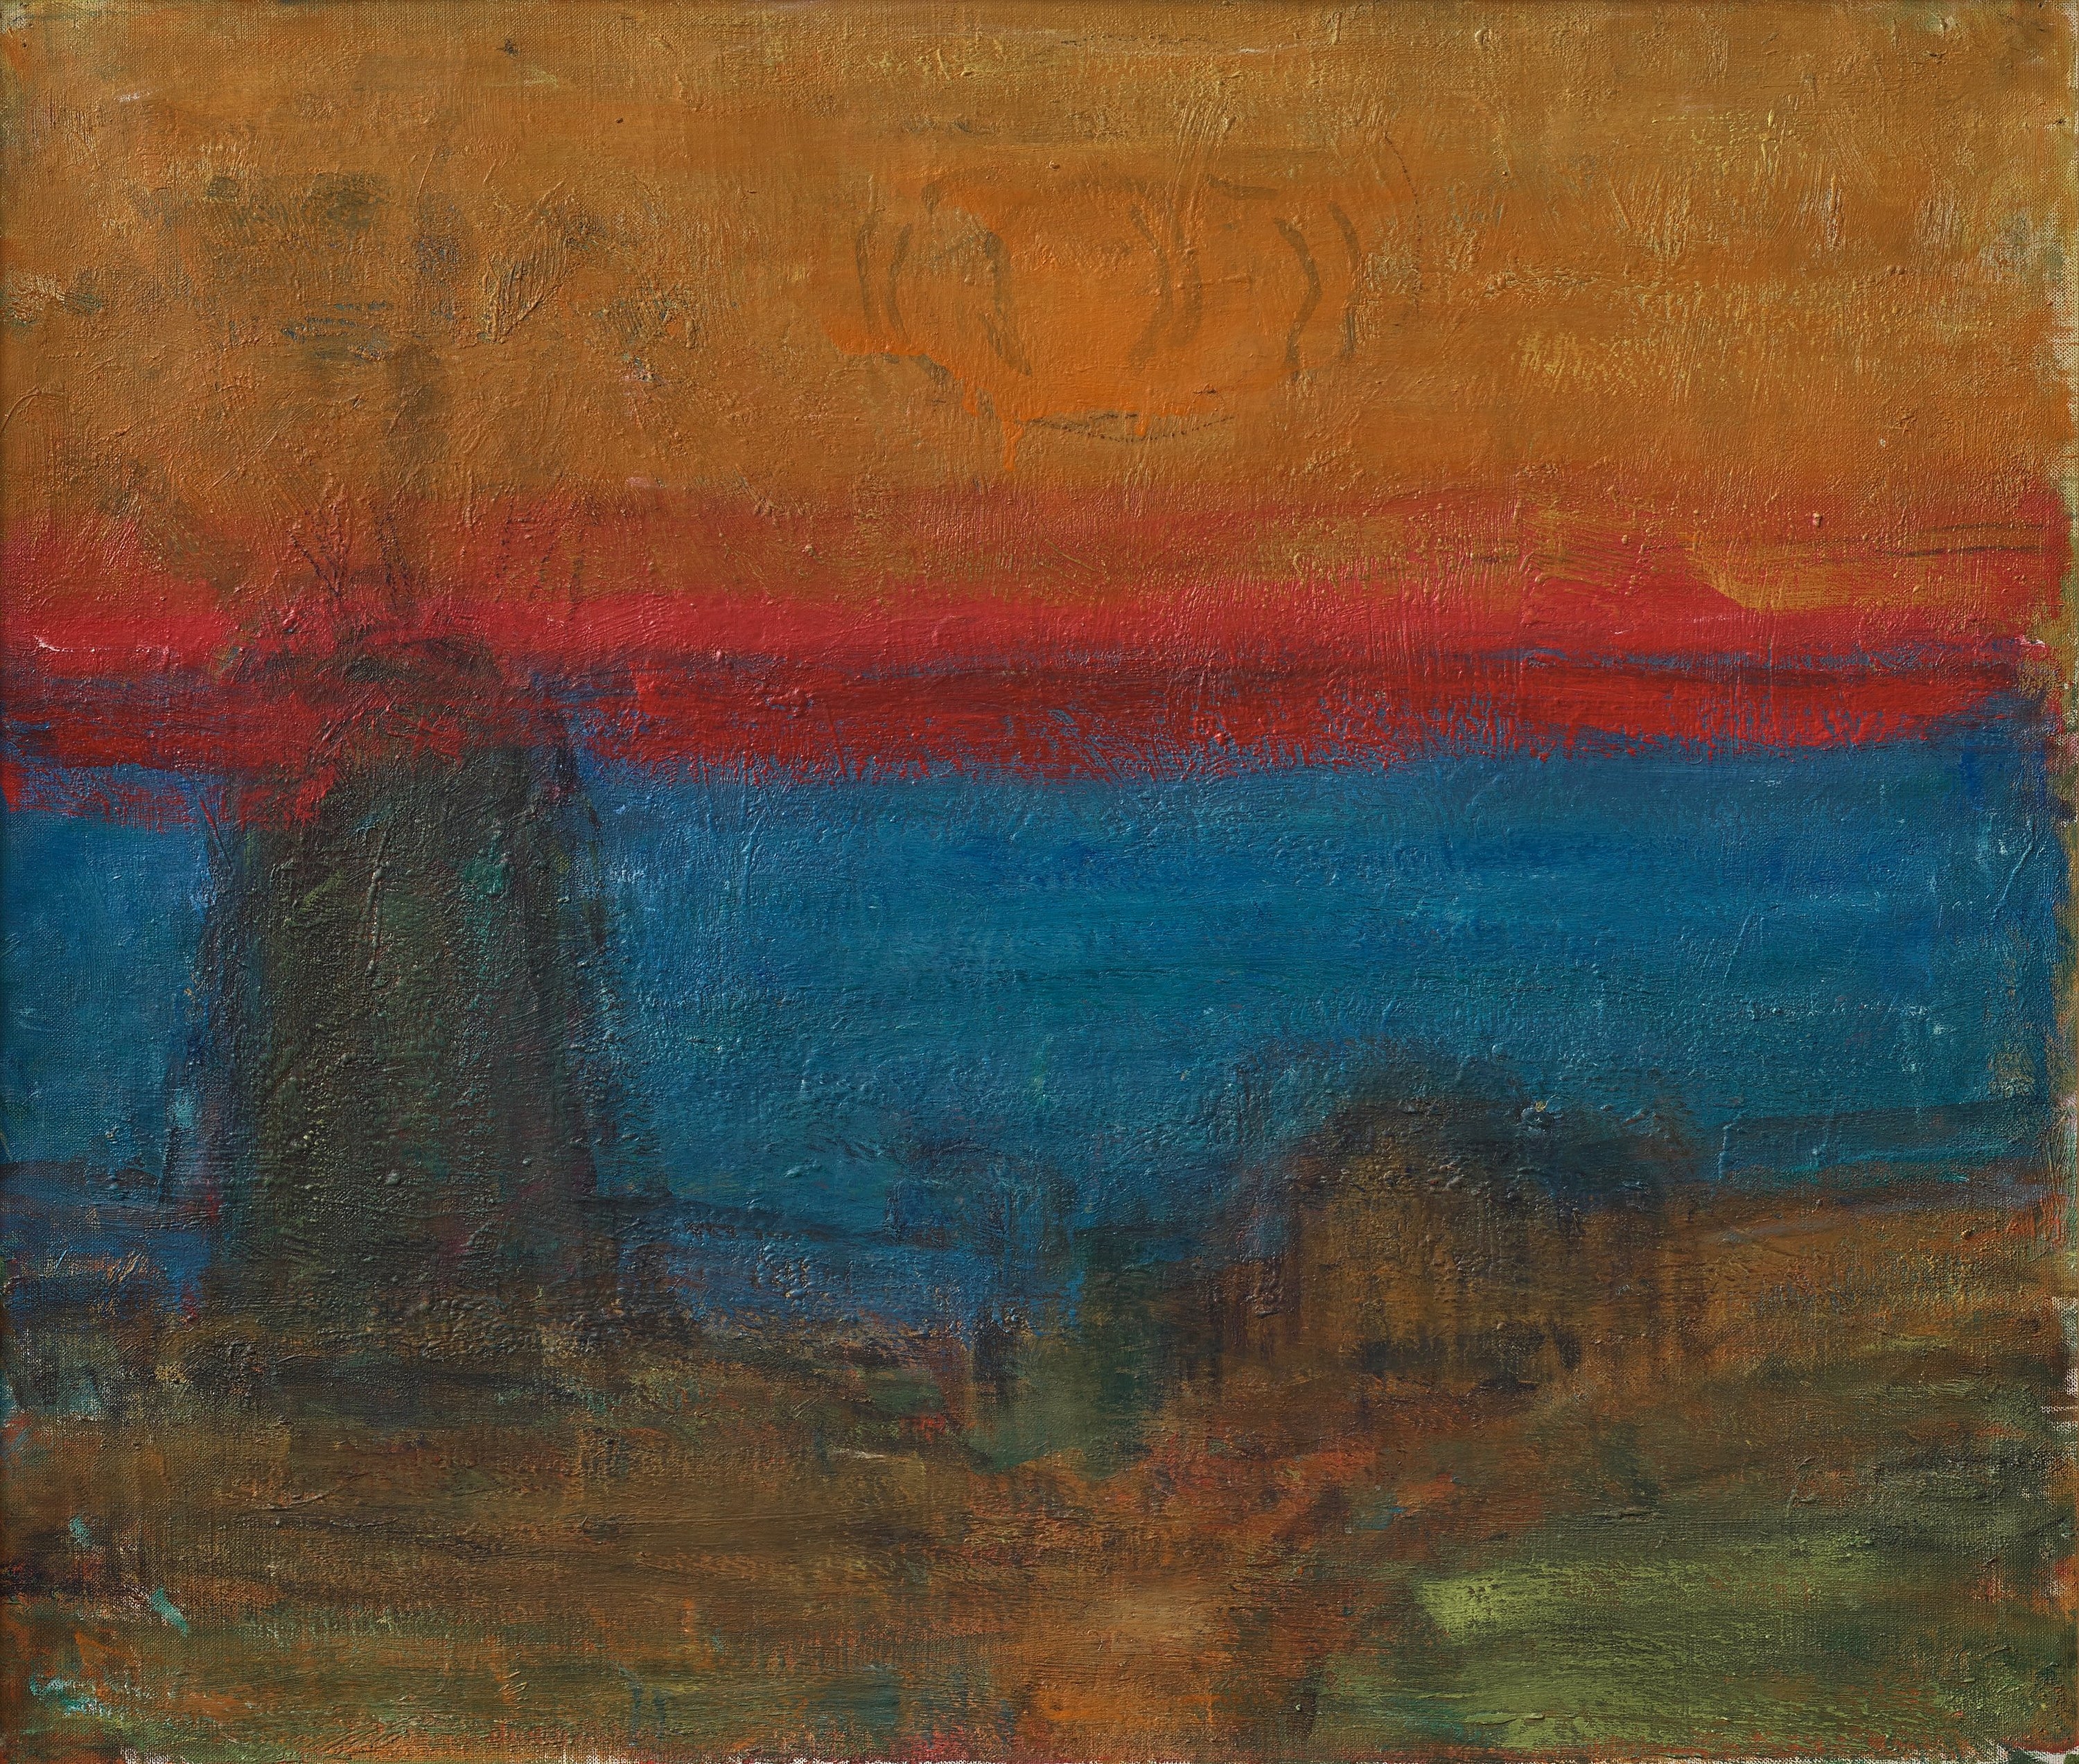 "Flaming sky" (Flammande himmel) by Carl Kylberg, Executed 1947